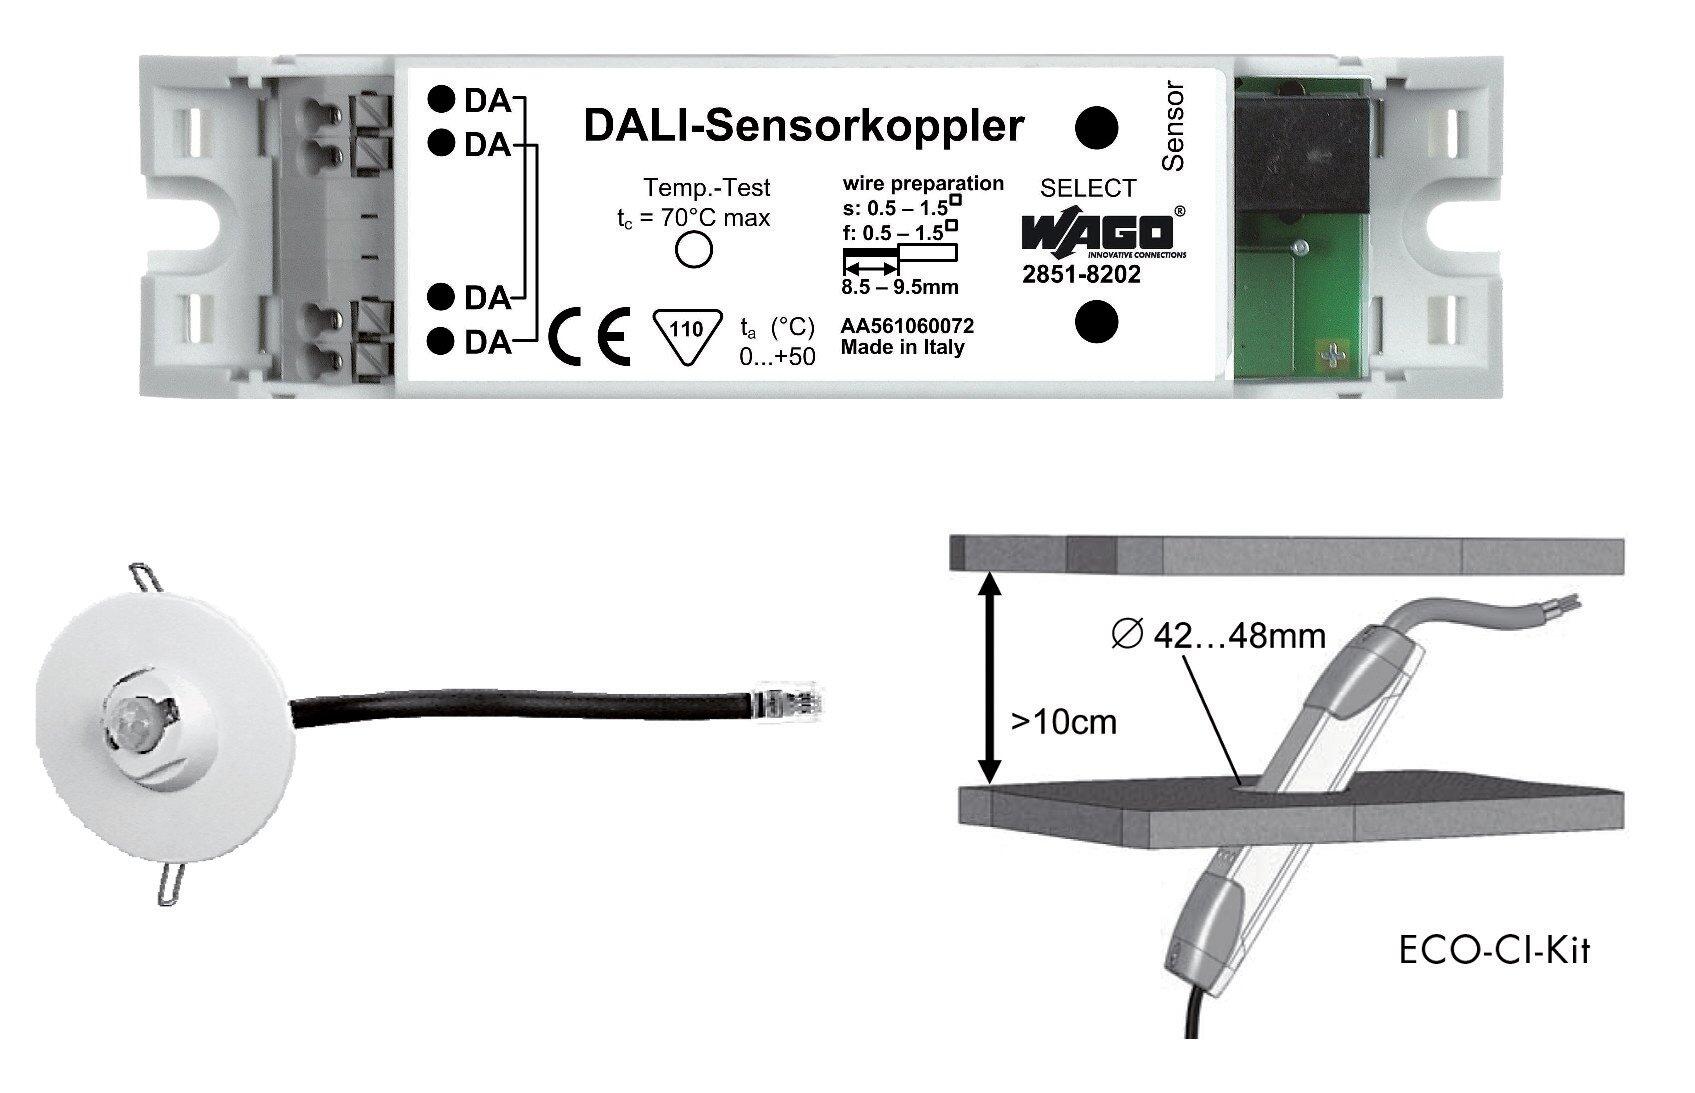 WAGO DALI Multi-Sensor Kit